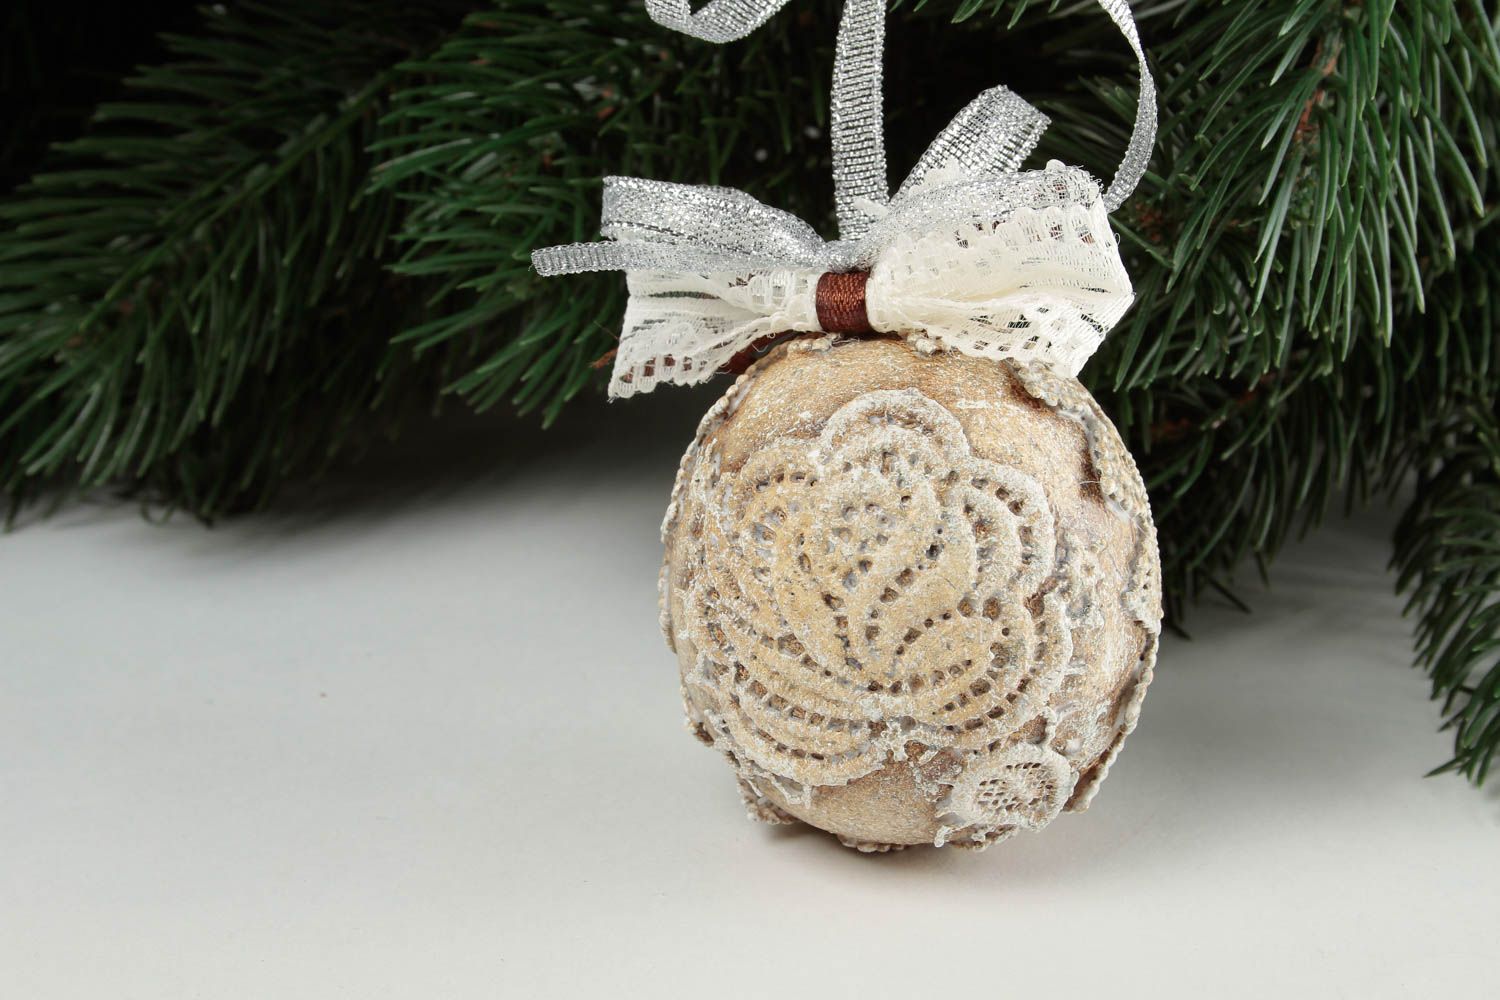 Handmade Christmas ornament Christmas tree decorations decorative use only photo 1